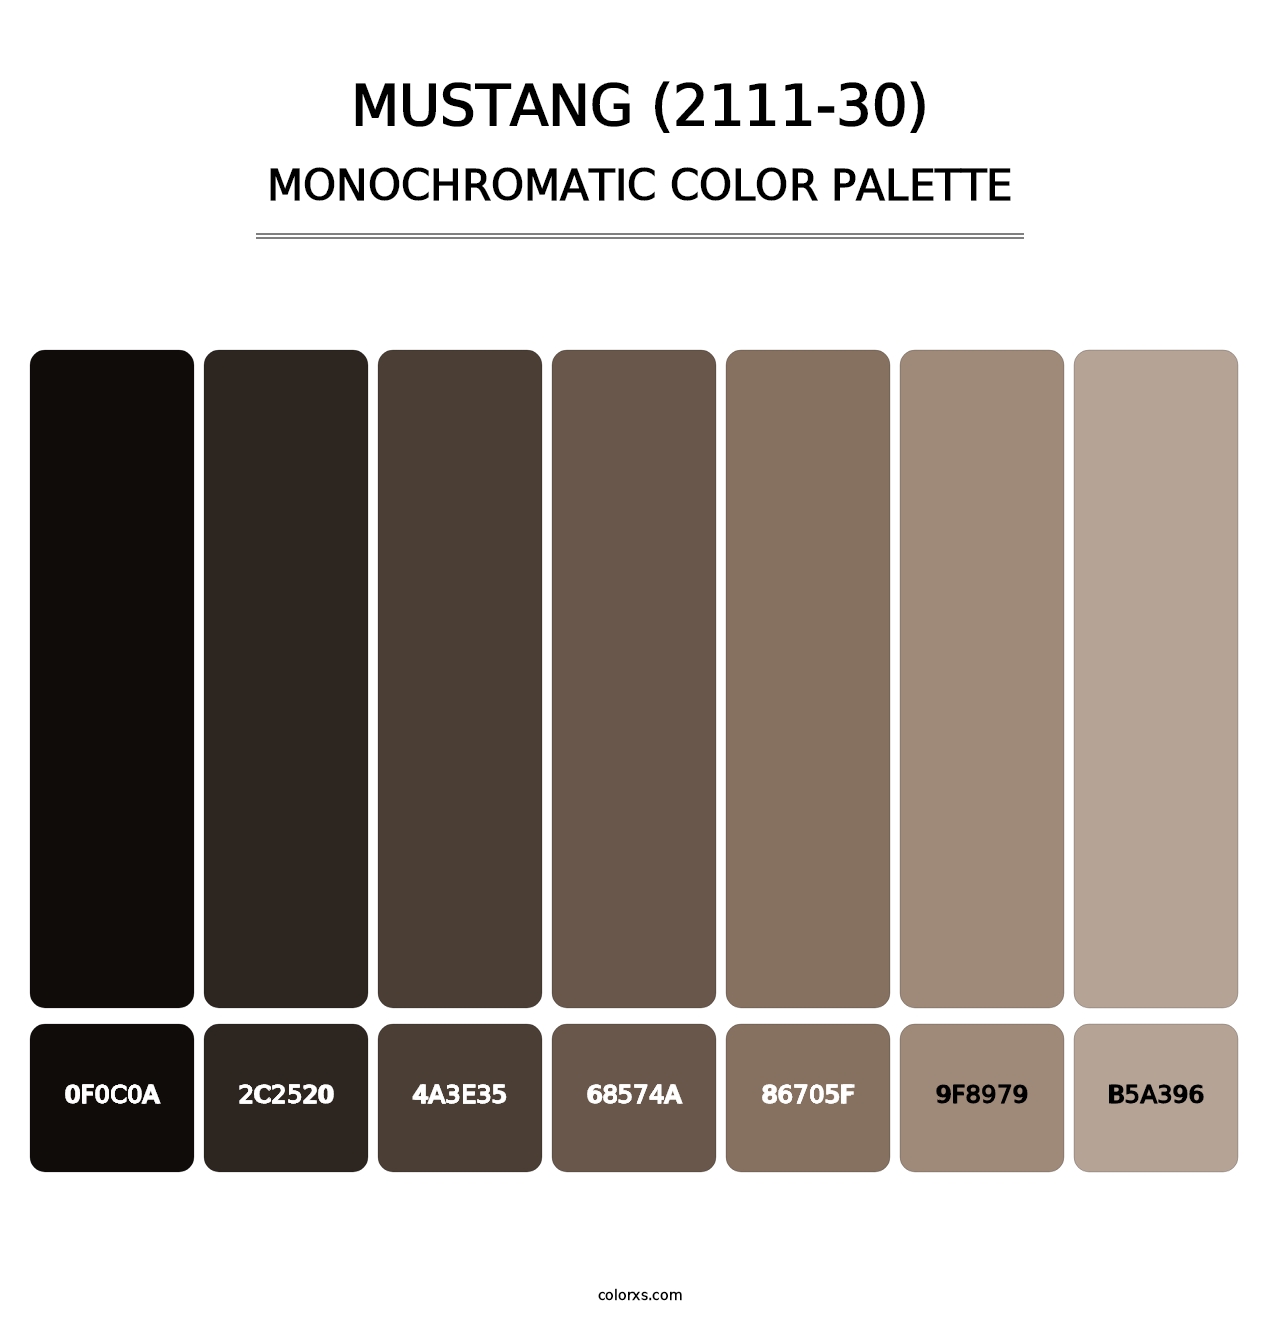 Mustang (2111-30) - Monochromatic Color Palette